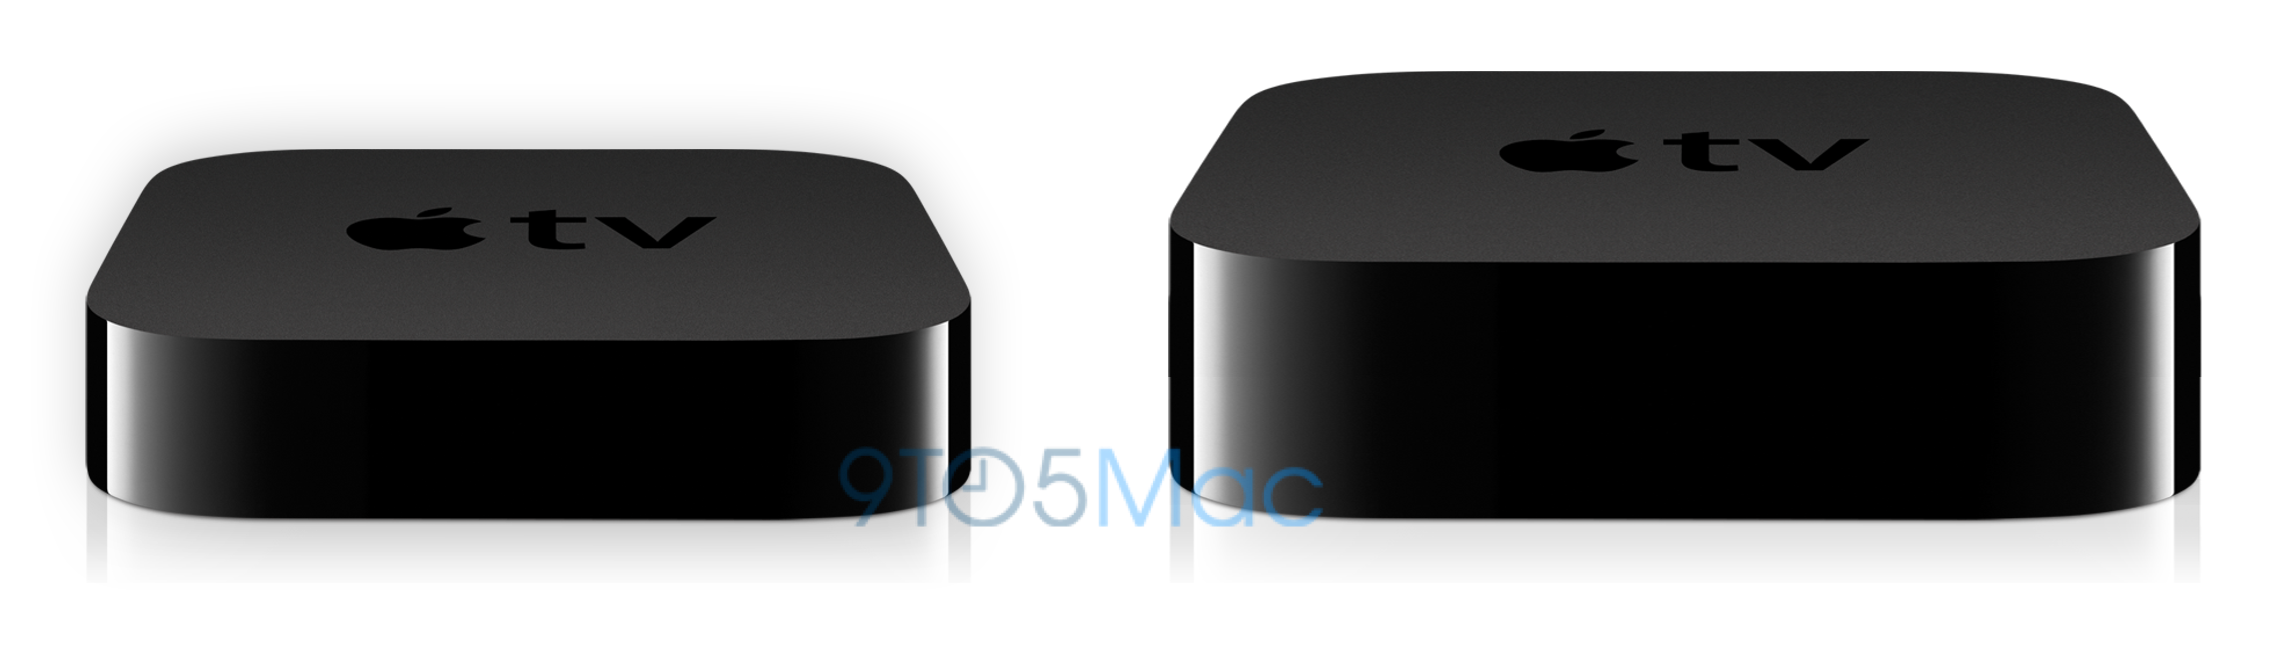 Spiritus kiwi tillykke Apple TV 4 hardware revealed: A8 chip, black remote, 8/16GB storage, same  ports, no 4K - 9to5Mac